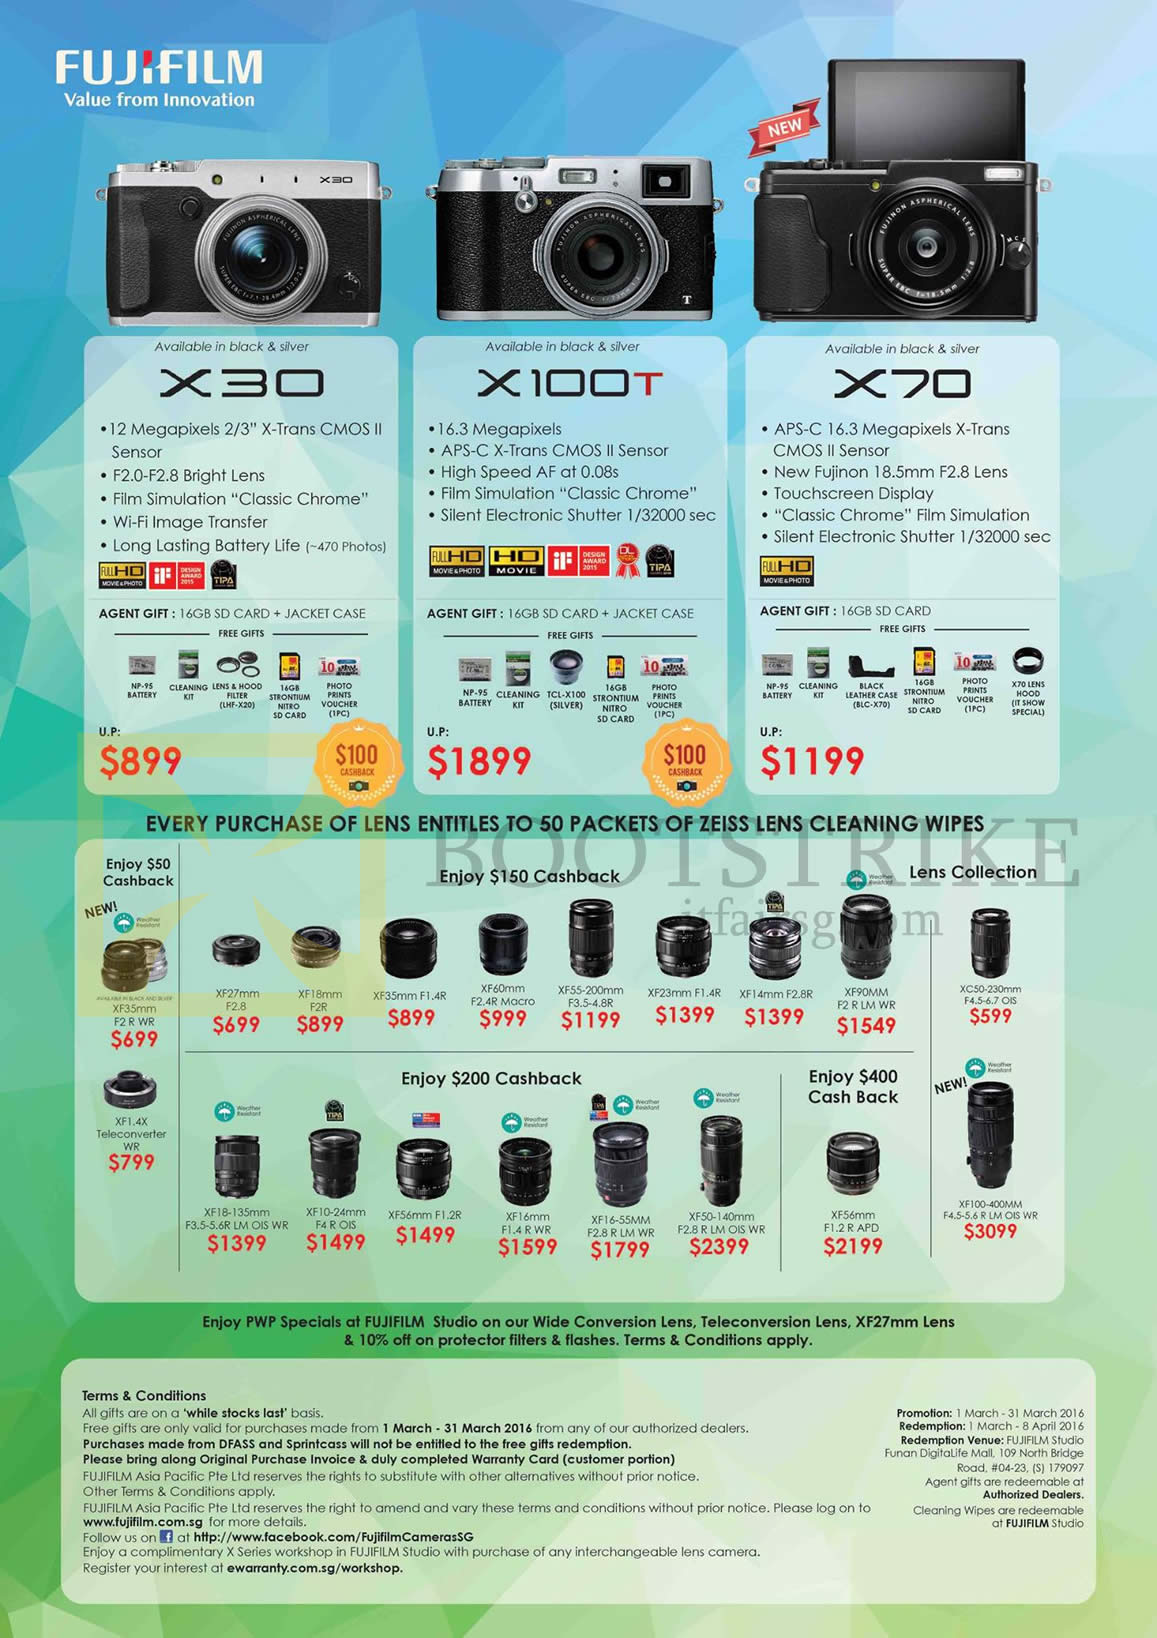 IT SHOW 2016 price list image brochure of Fujifilm Digital Cameras X30, X100T, X70, Lenses